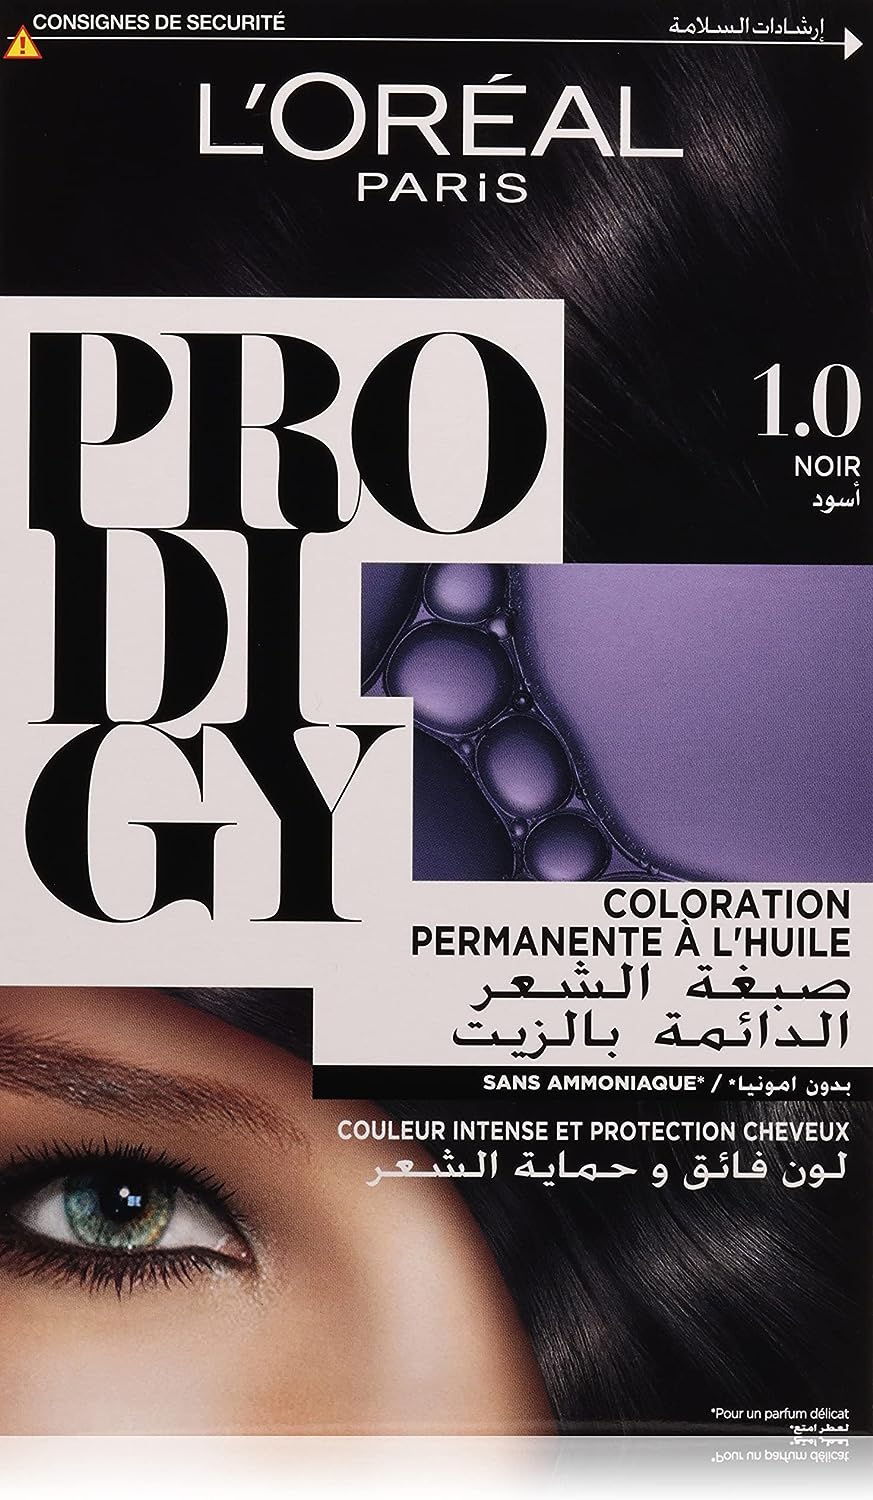 LOreal Paris Prodigy, 1.0 Black